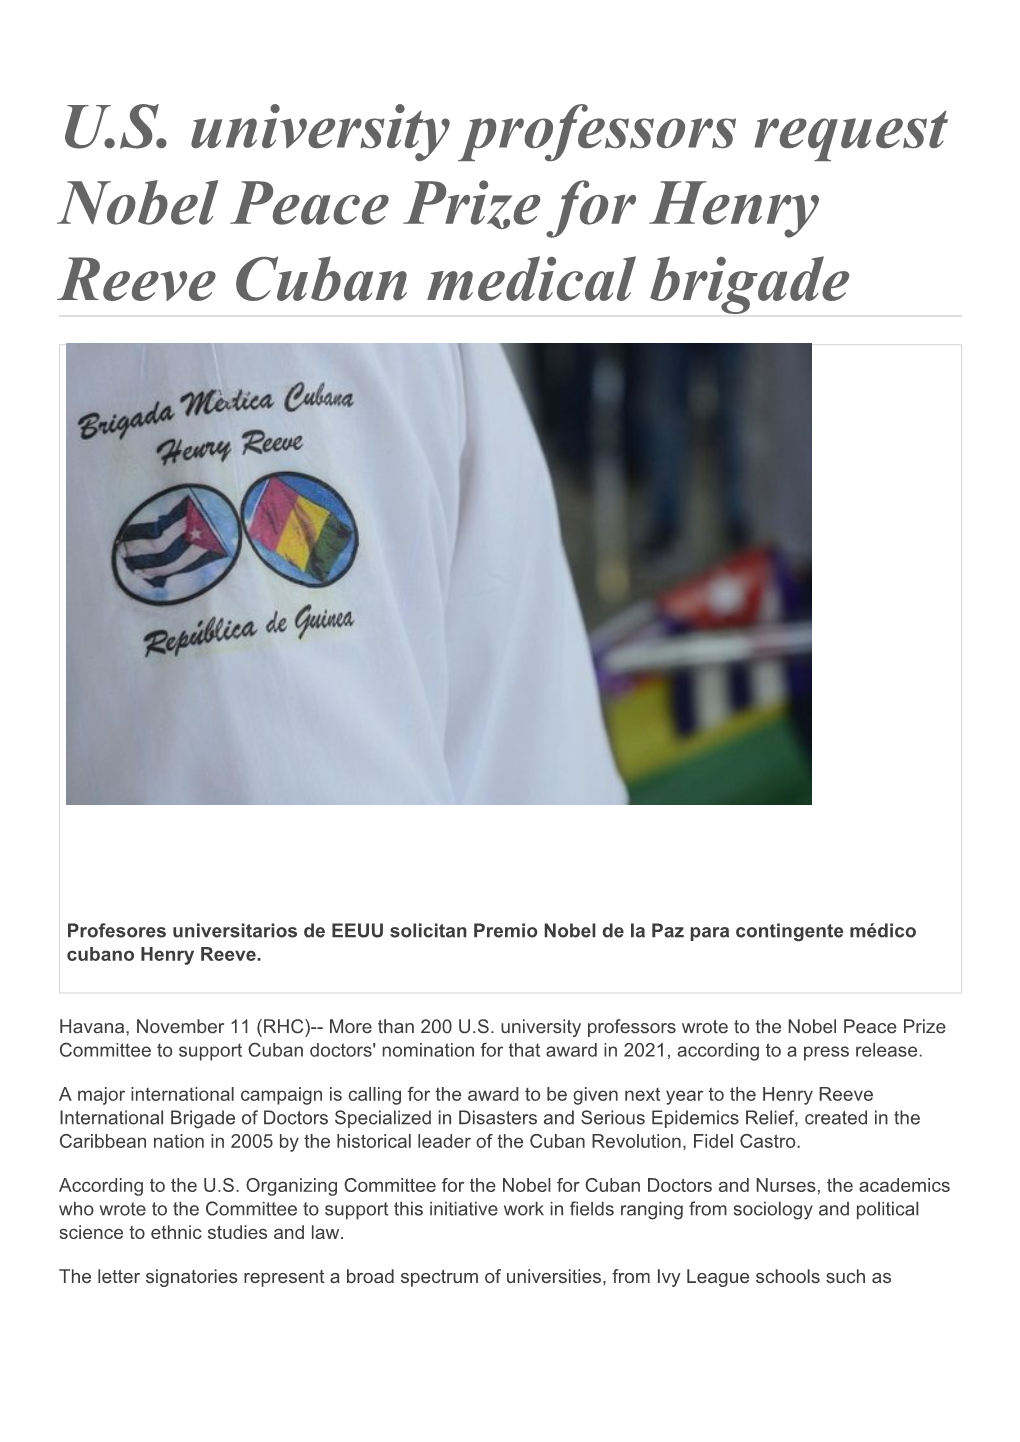 U.S. University Professors Request Nobel Peace Prize for Henry Reeve Cuban Medical Brigade